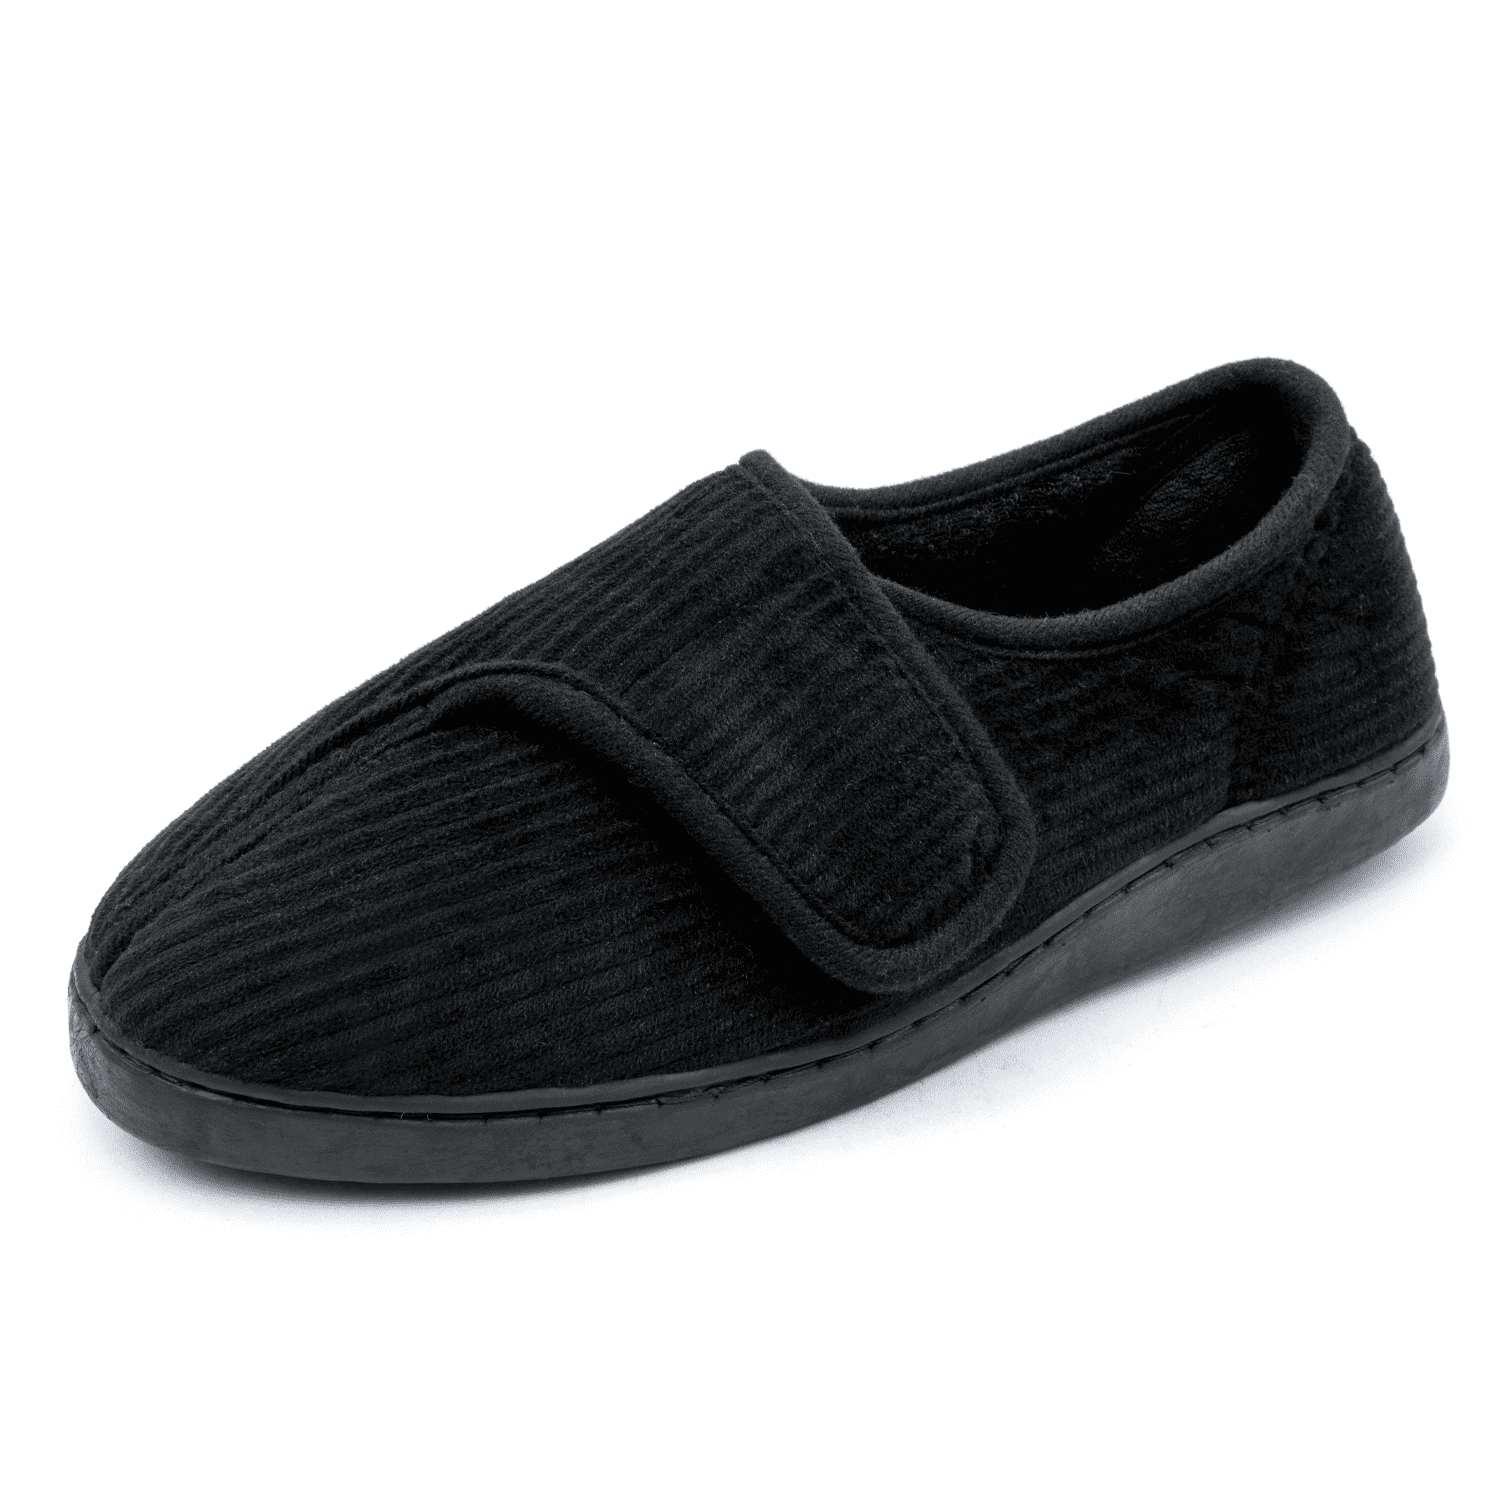 Git-up Diabetic Slippers Shoes for Men Arthritis Edema Adjustable Closure Memory Foam House Shoes N